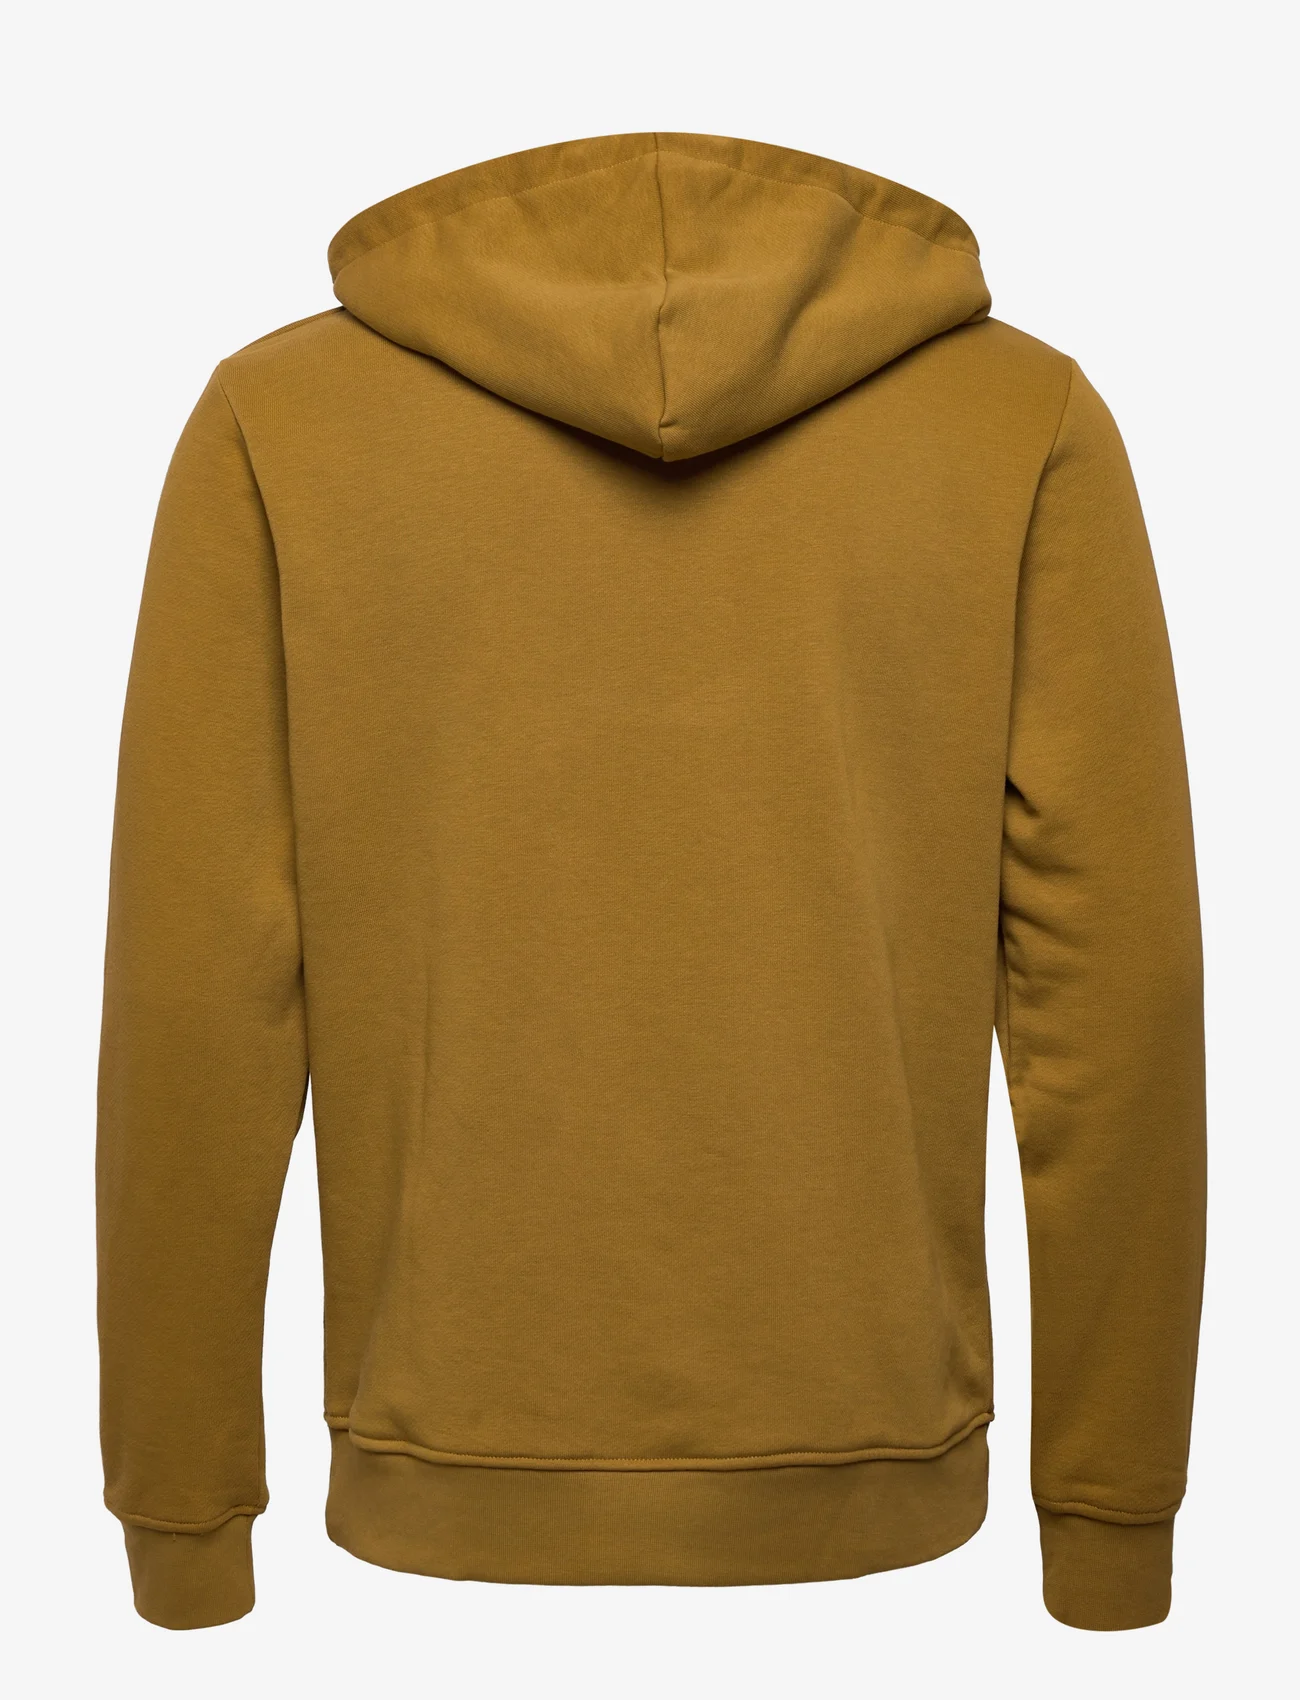 Clean Cut Copenhagen - Basic Organic Hood - sweatshirts - bronze - 1